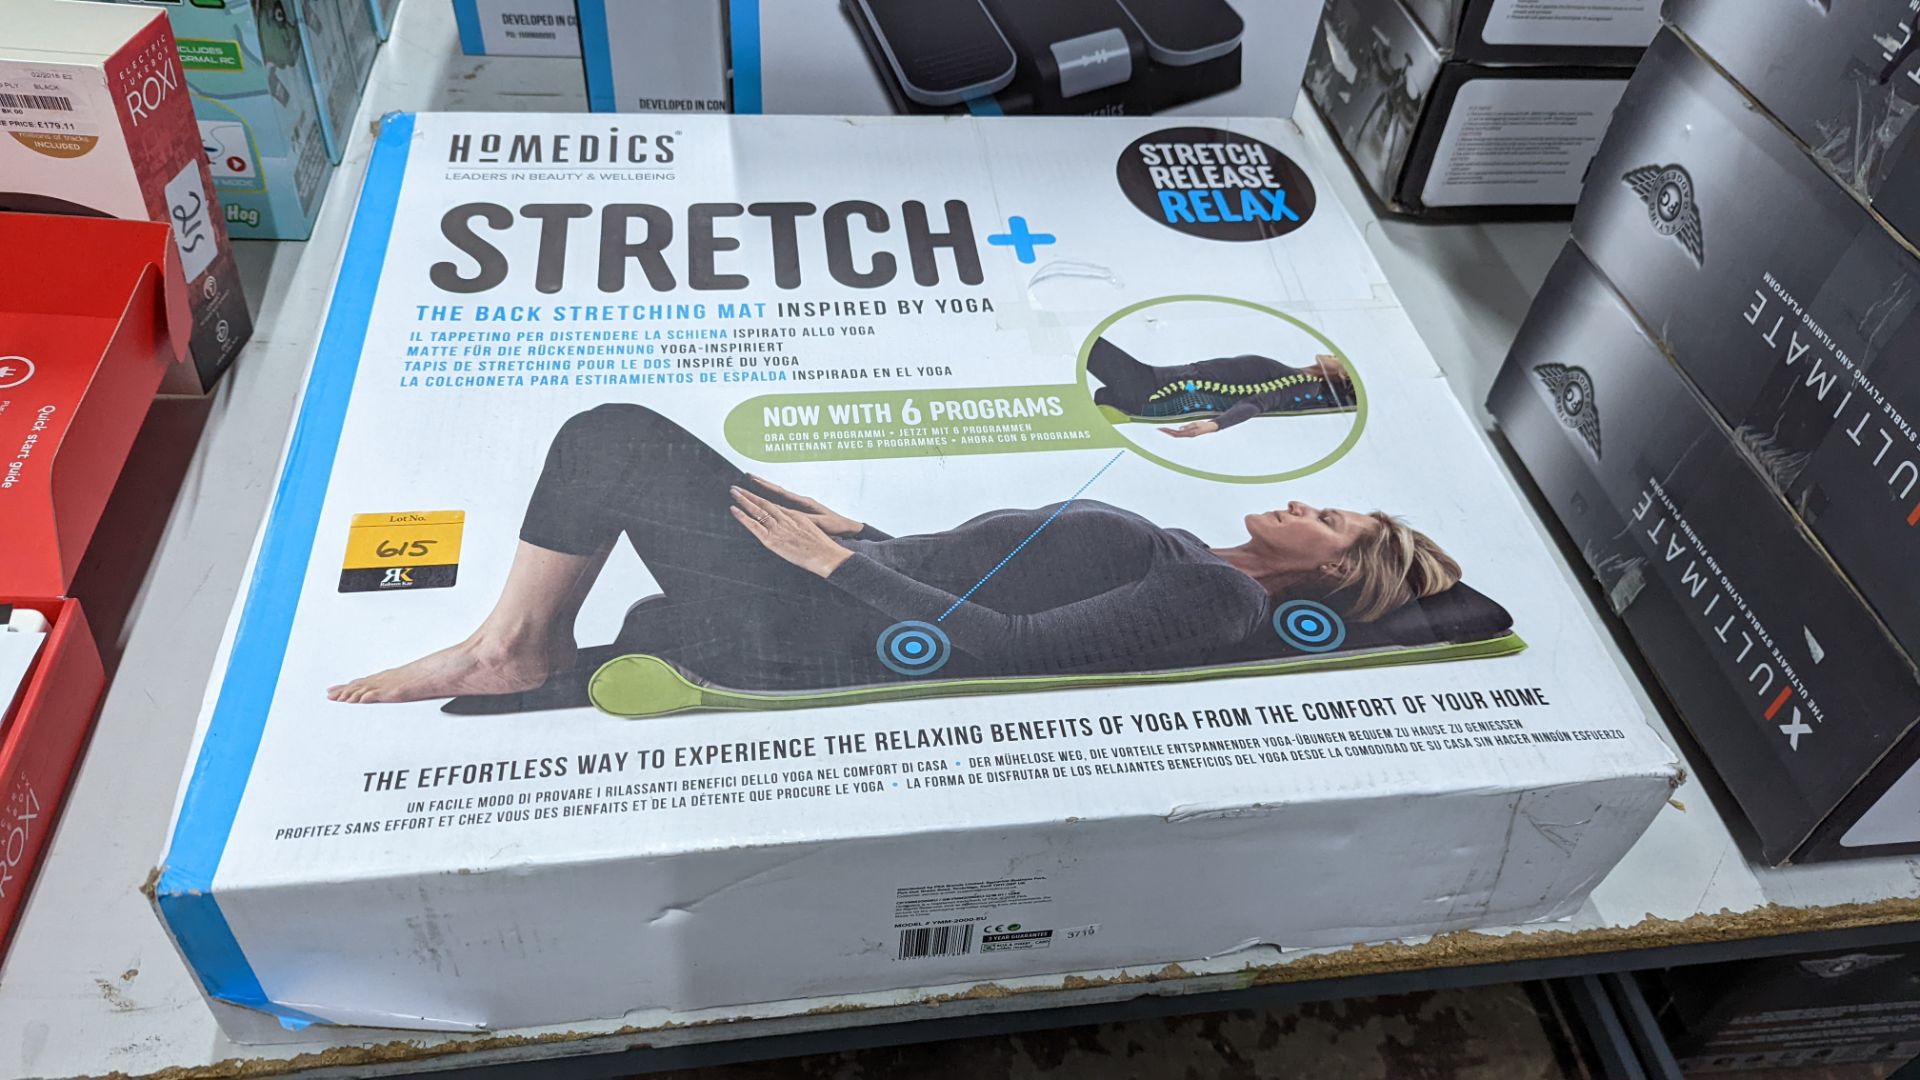 Homedics Stretch+ back stretching mat